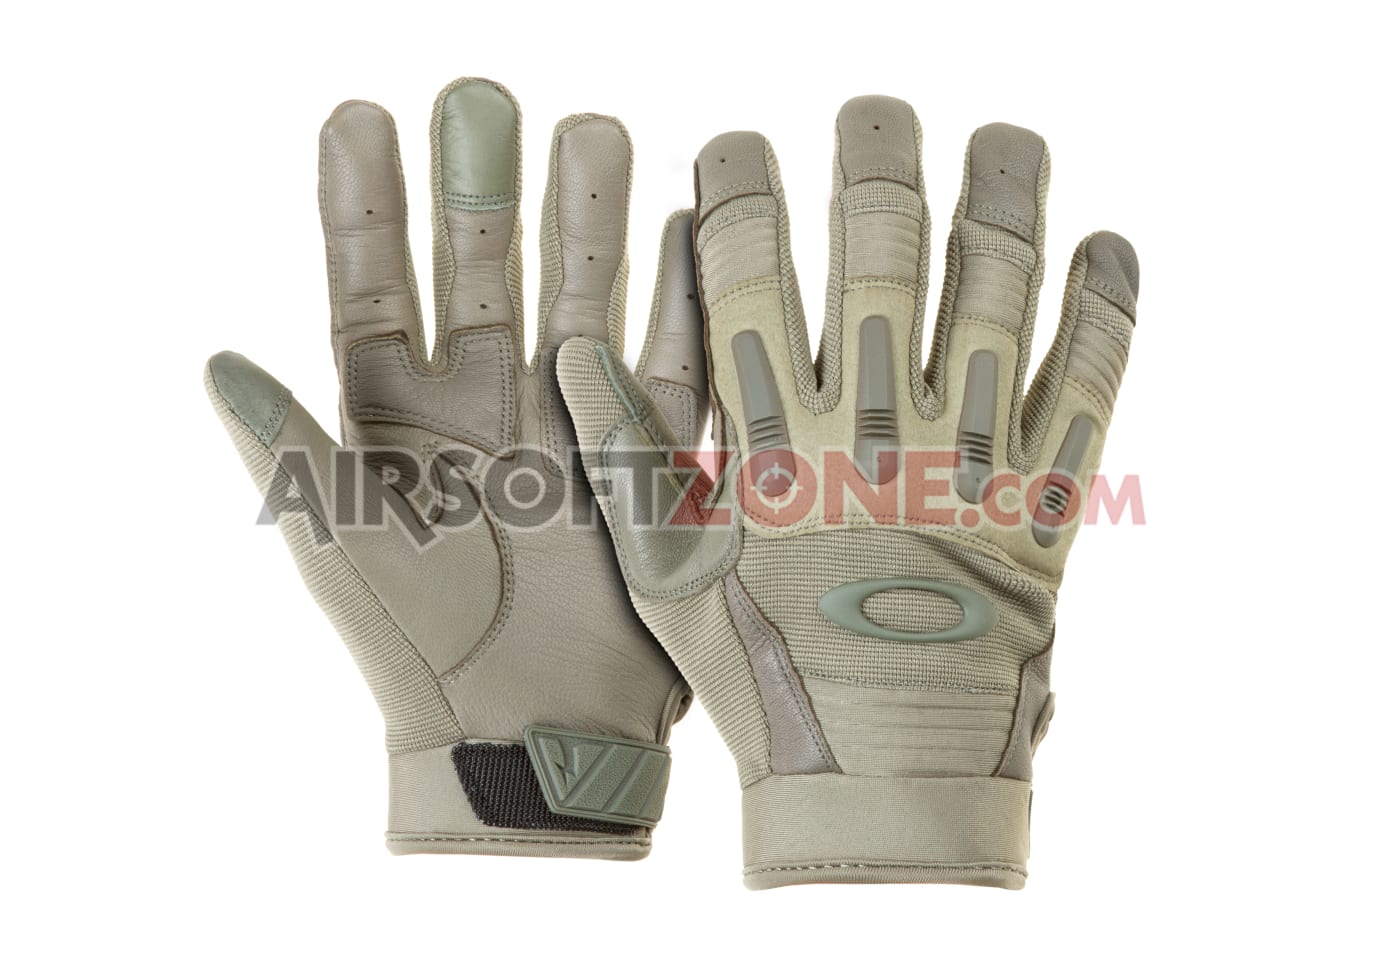 SFI20 Gloves - Stock or Bespoke